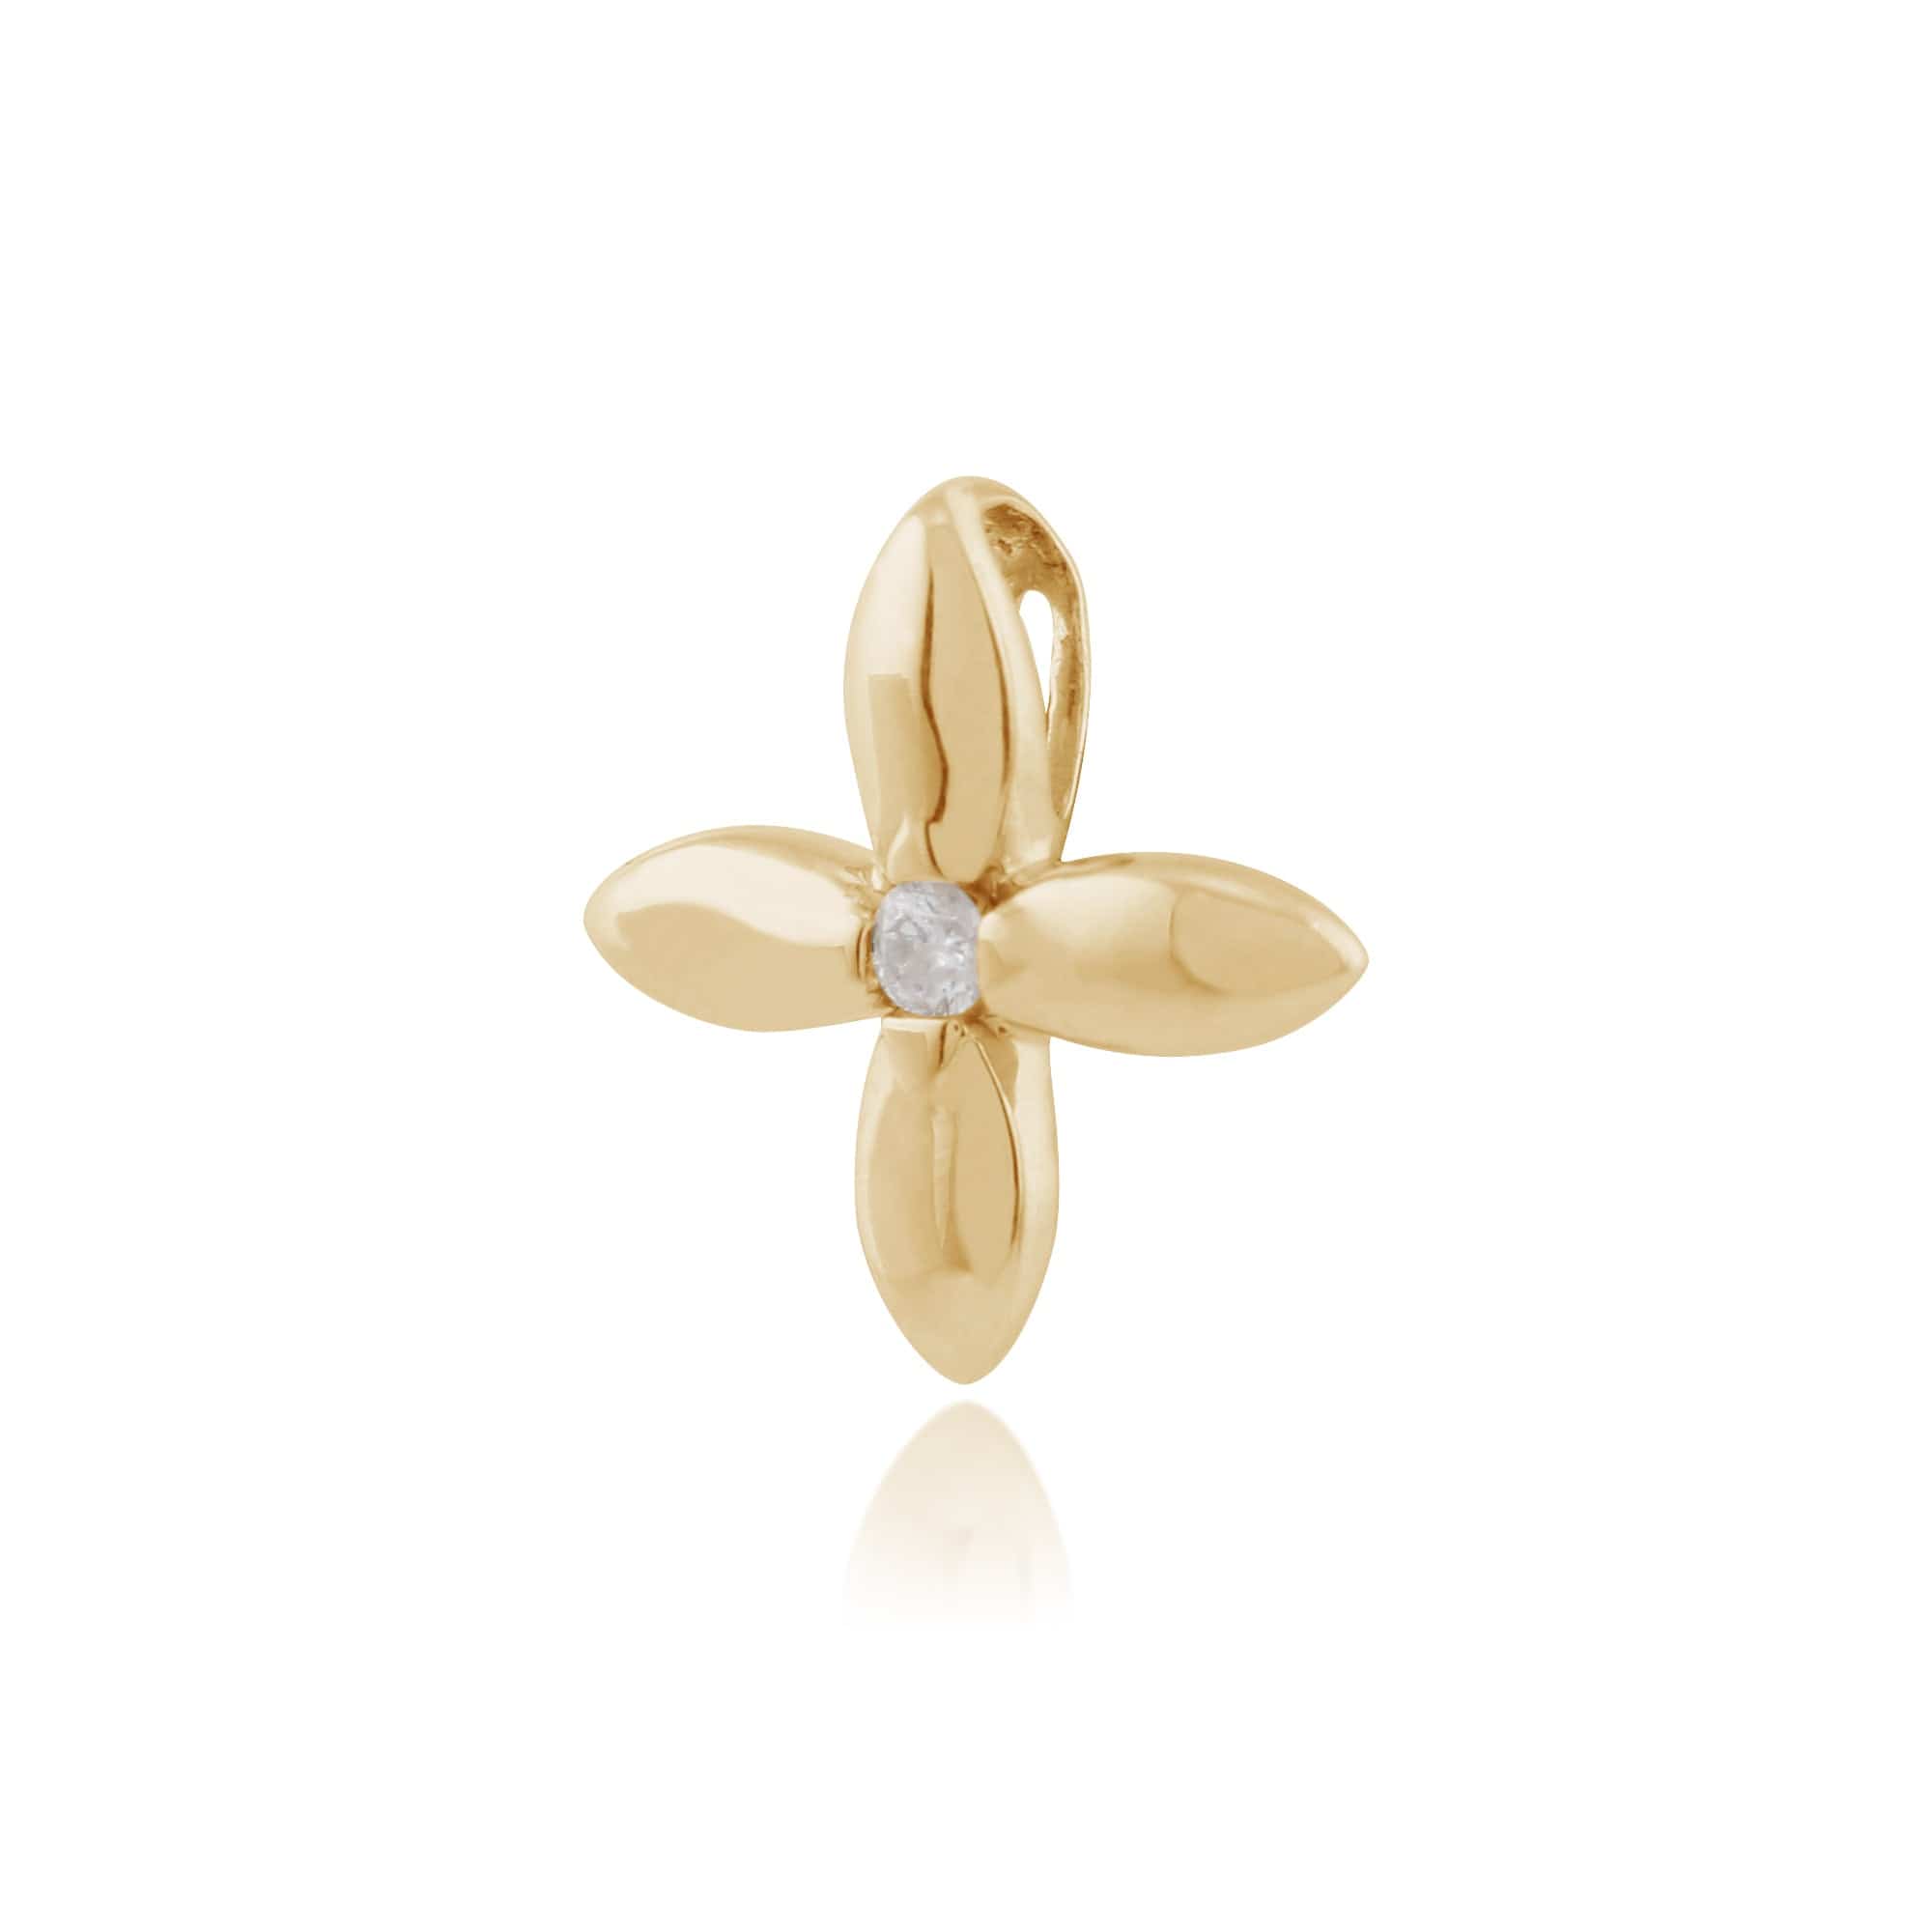 Floral Round Diamond Ixora Flower Single Stone Pendant in 9ct Yellow Gold - Gemondo